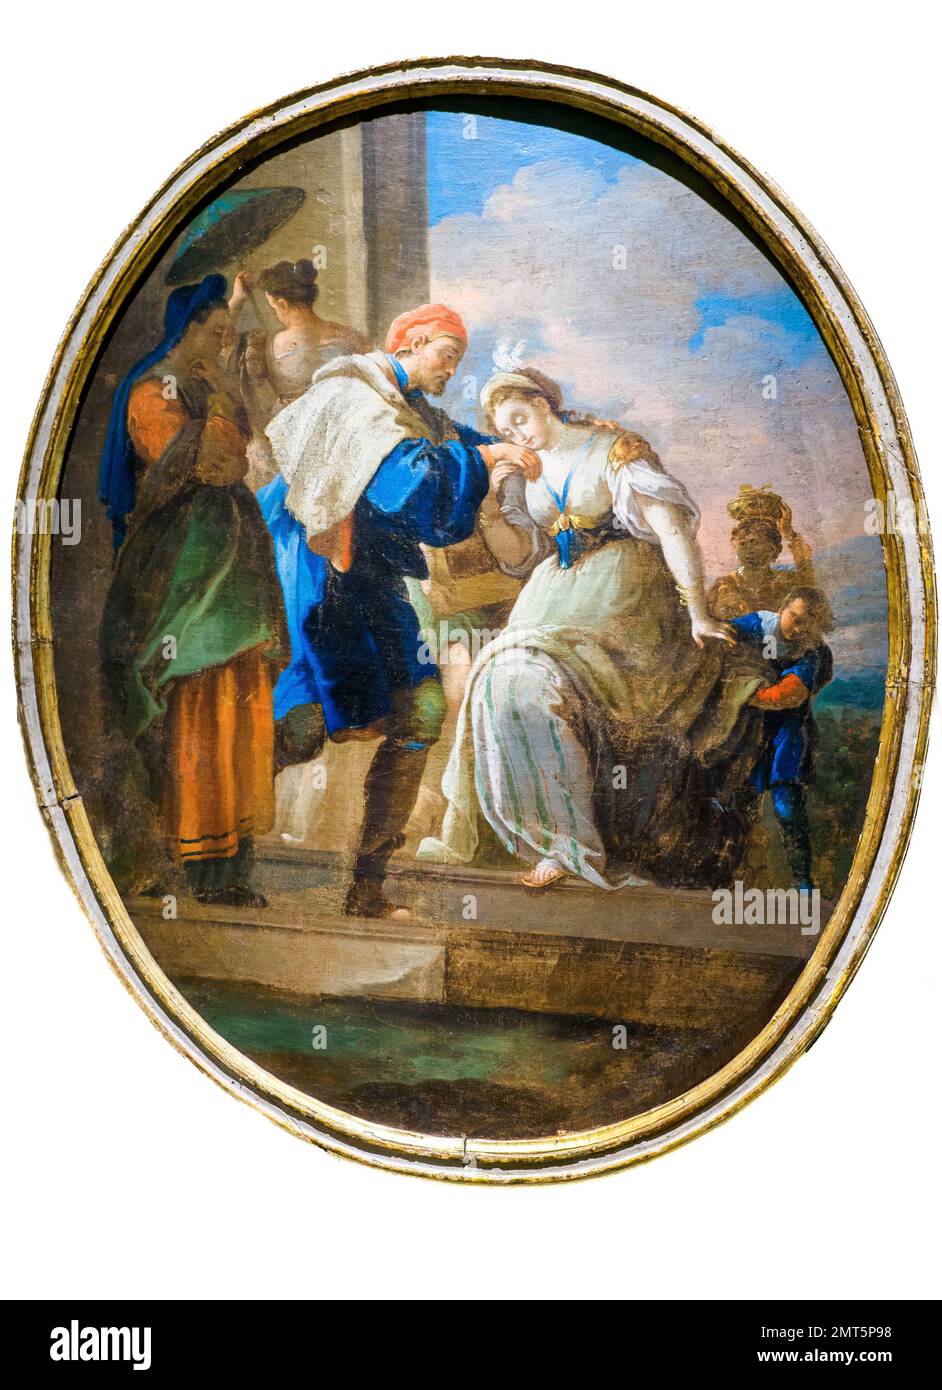 King Solomon and the Queen of Sheba by Costantino Carasi attrib., 18th century - oil on canvas - Galleria Regionale di Palazzo Bellomo, Ortigia - Syracuse, Sicily, Italy Stock Photo